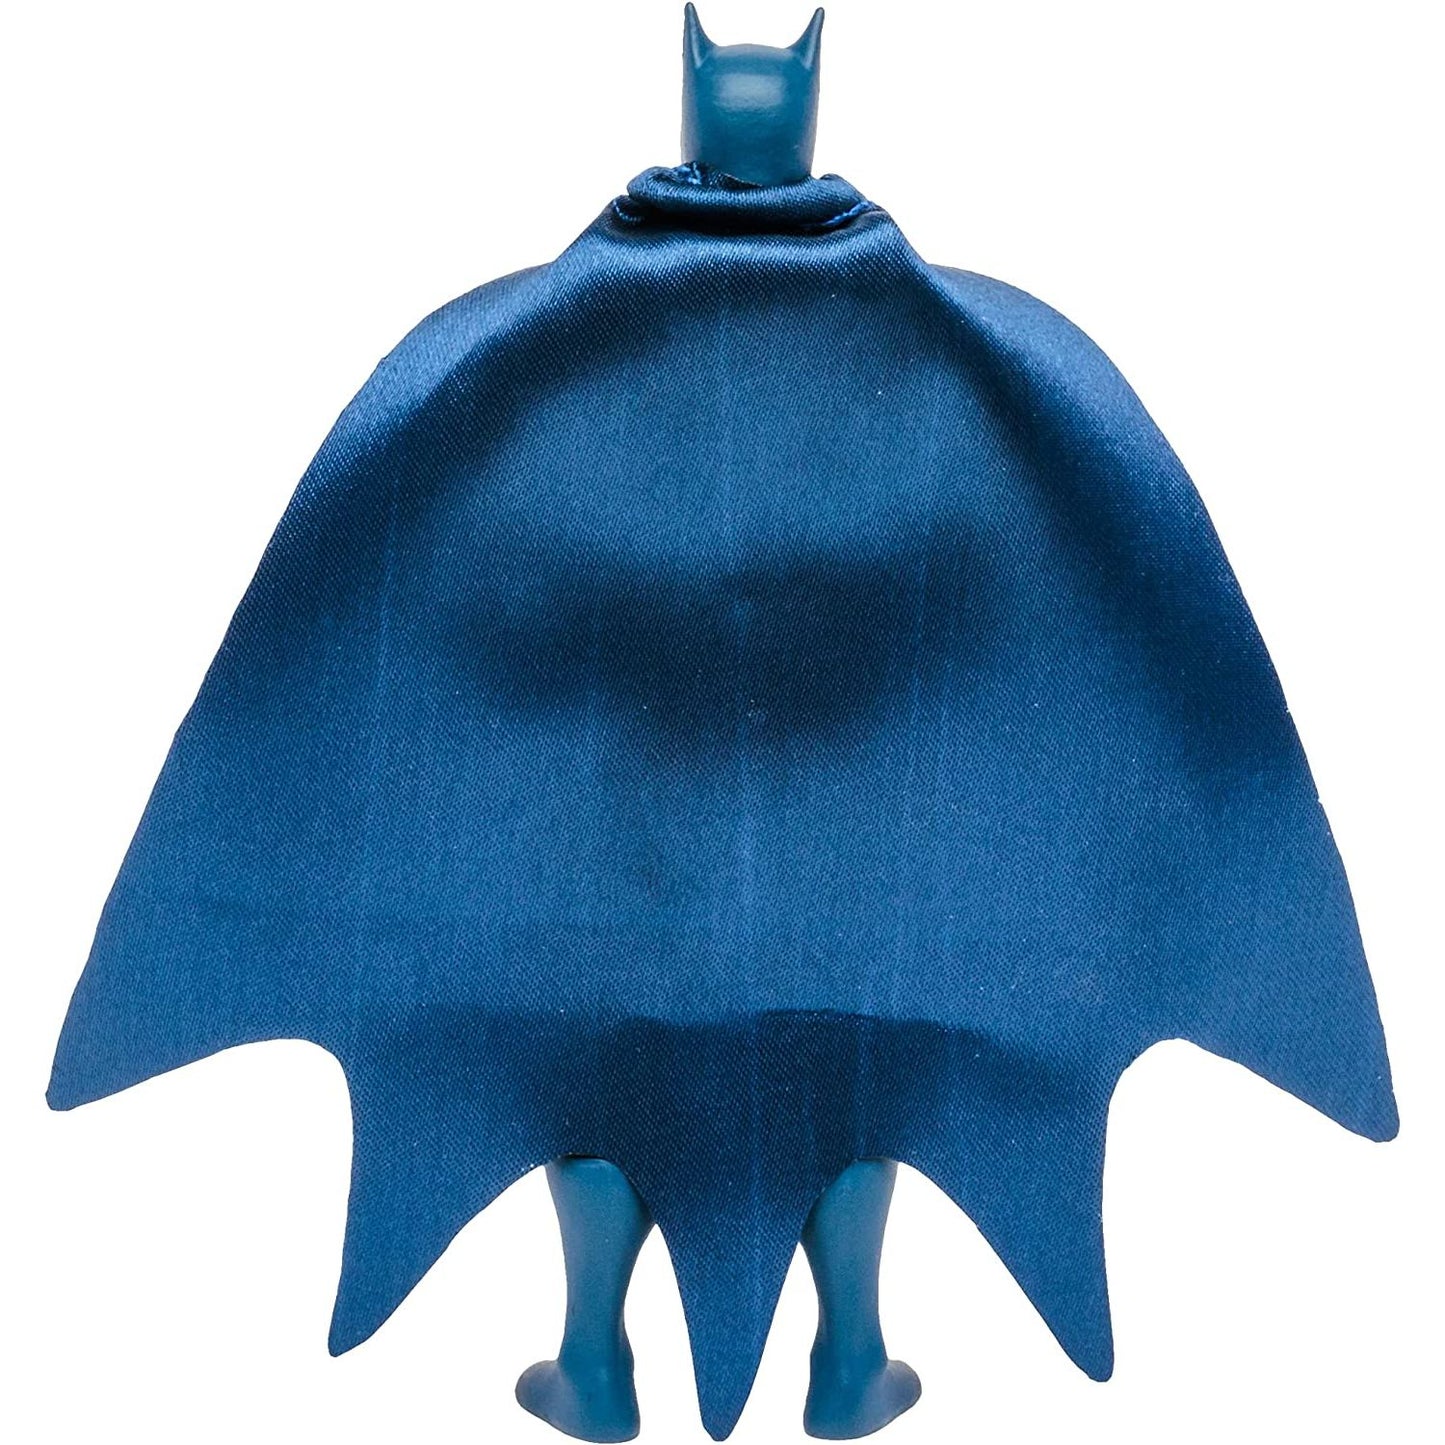 DC Direct - Super Powers - Hush Batman Figure back pose - Heretoserveyou